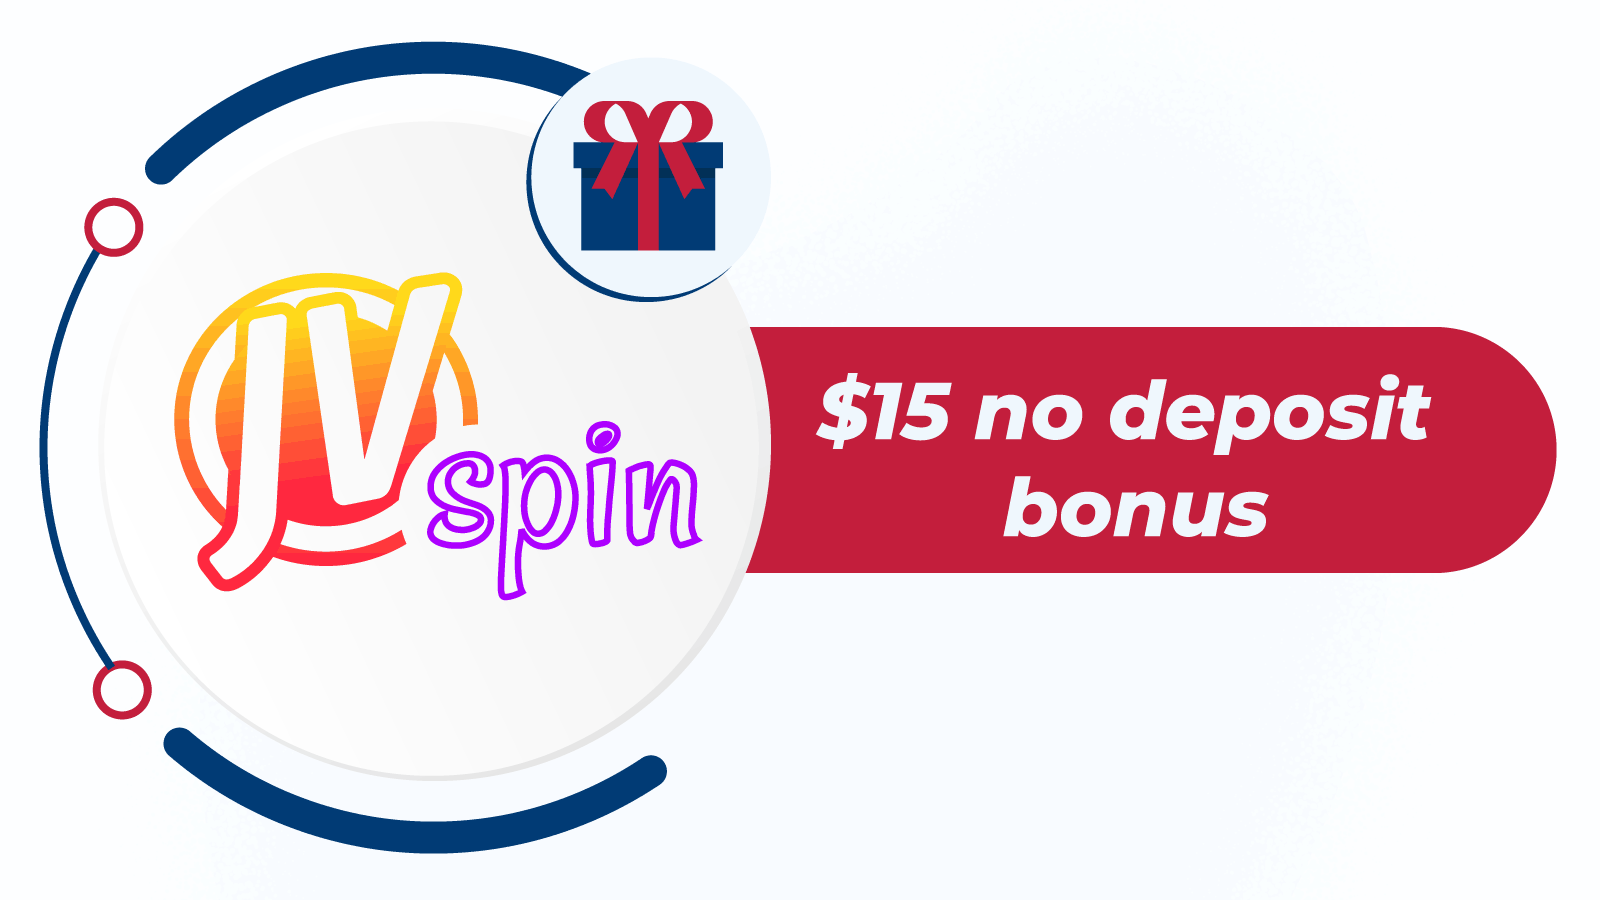 Why we chose JVSpin’s $15 no deposit bonus